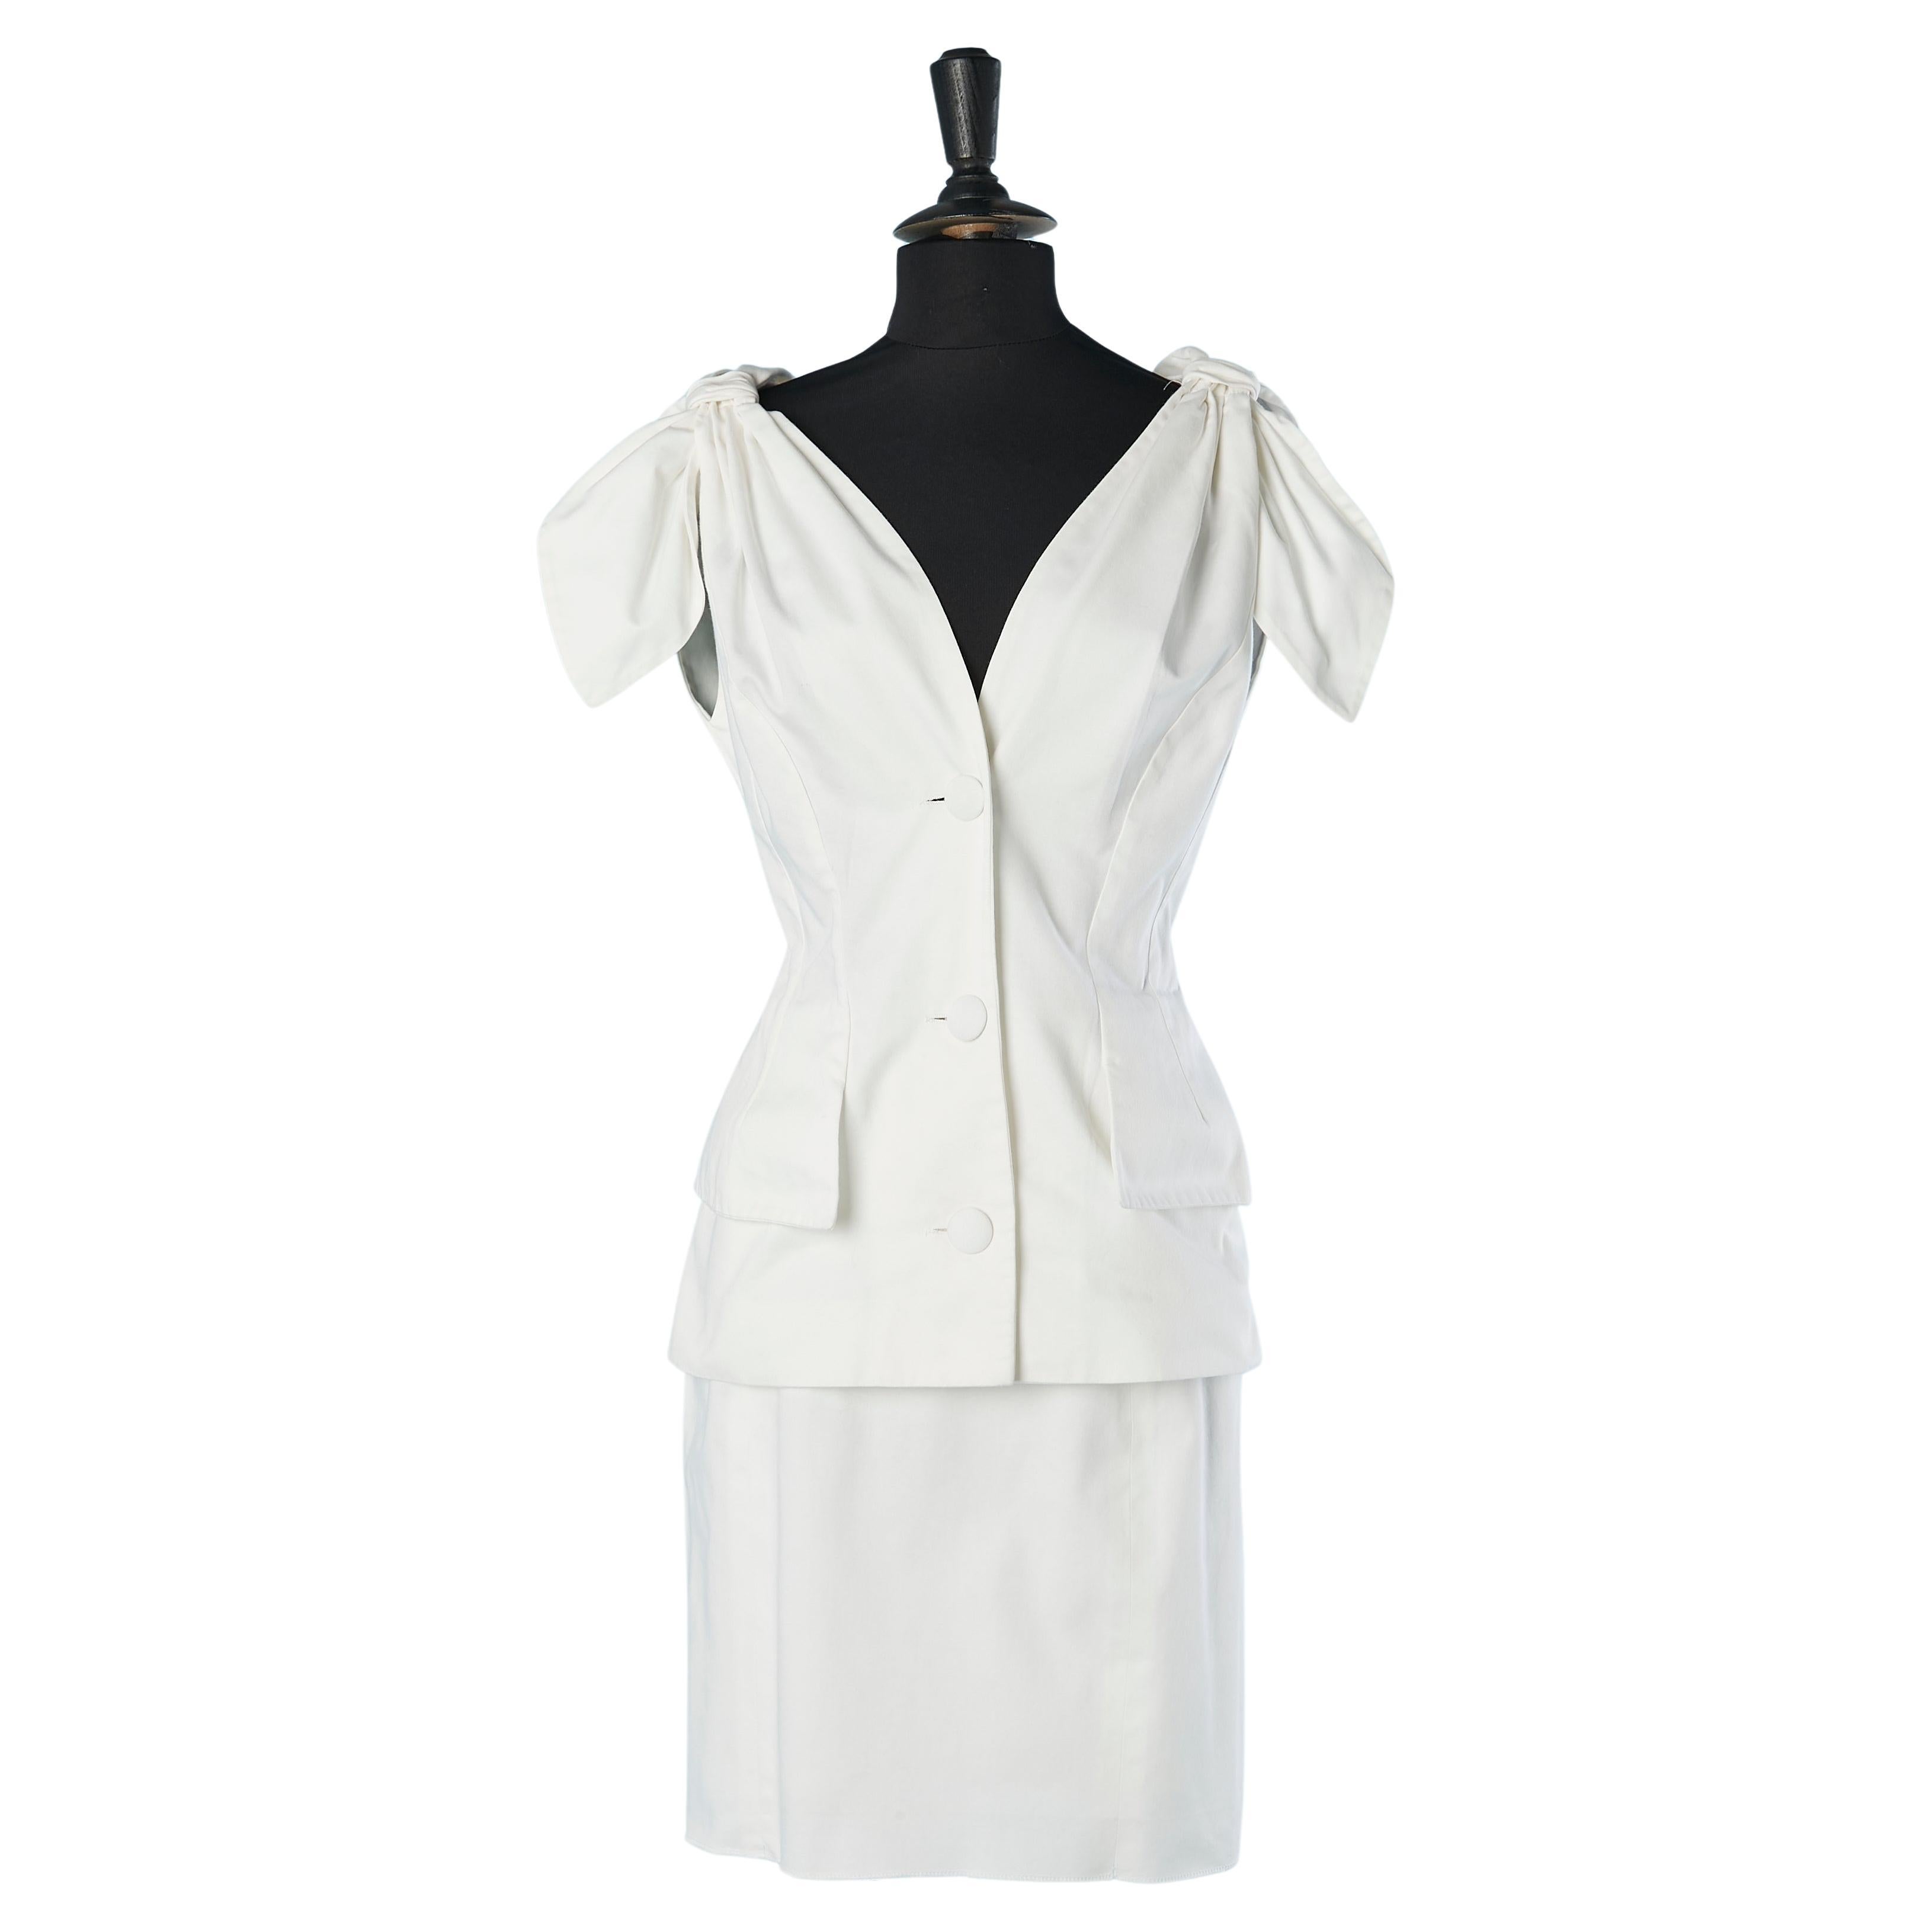 White cotton sleeveless jacket and skirt ensemble Lecoanet Hémant 